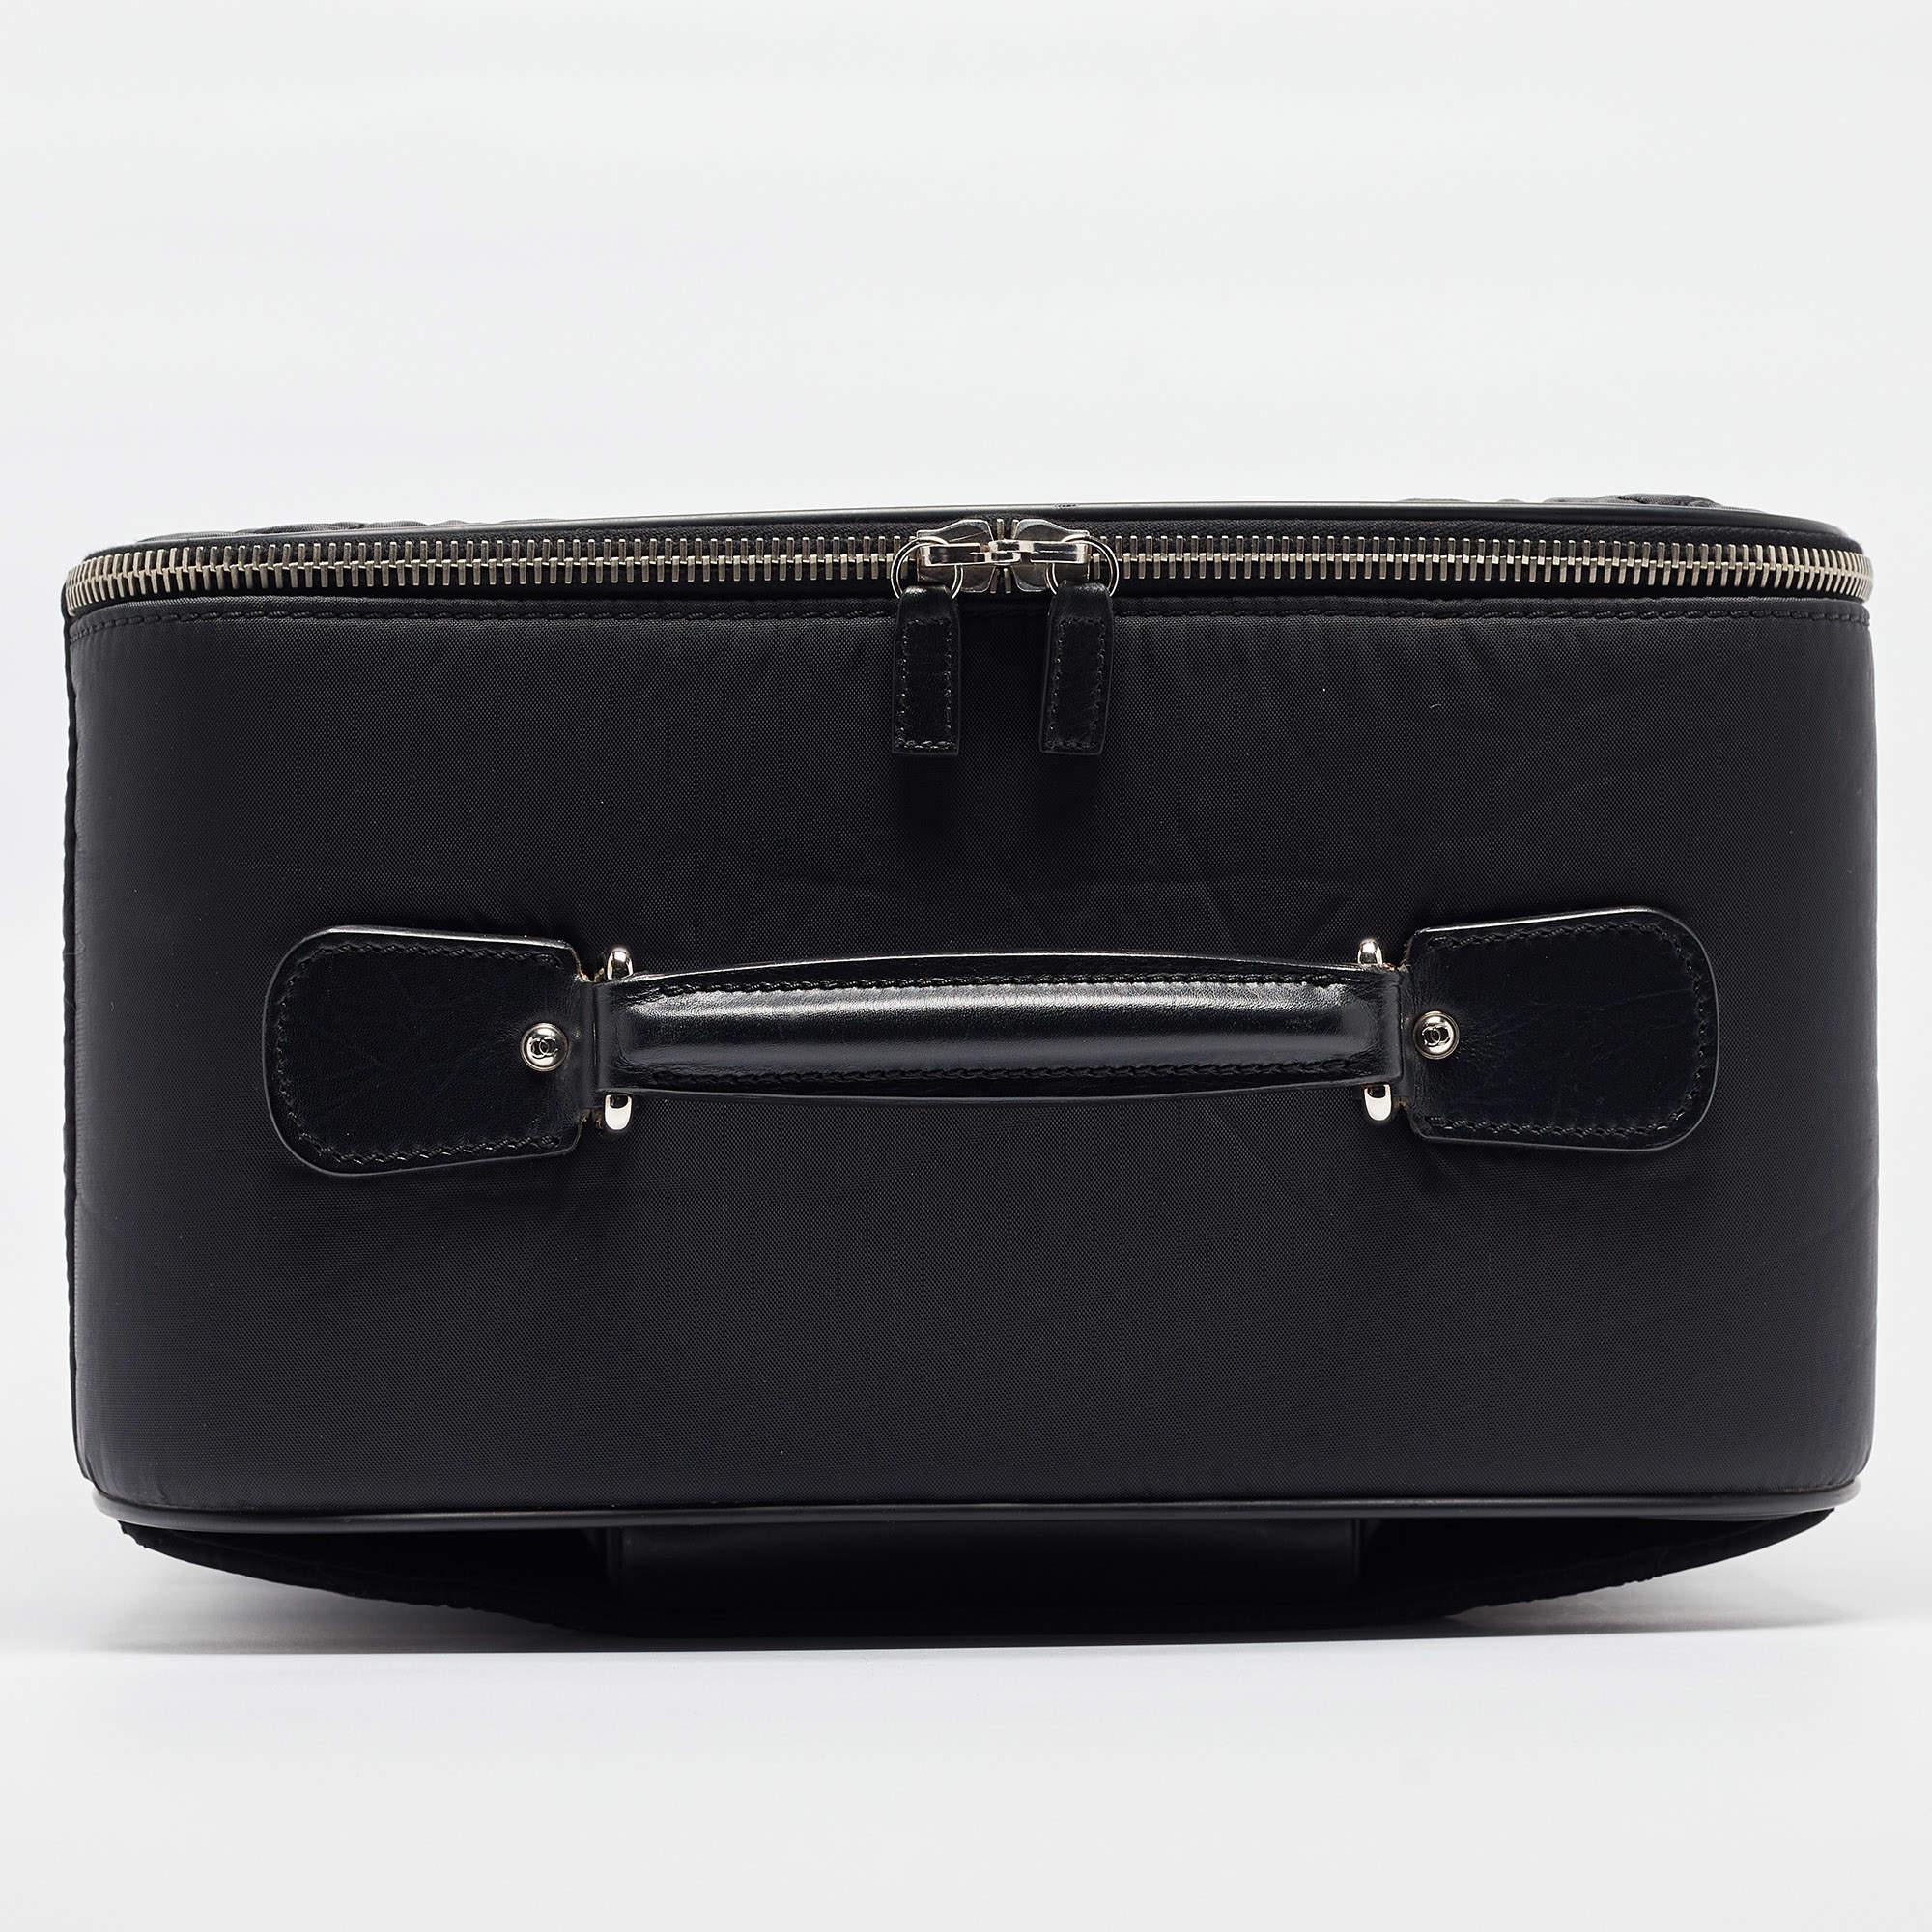 Chanel Black Quilted Nylon 2 Wheeled CC Luggage (Bagages à 2 roues en nylon matelassé) 14